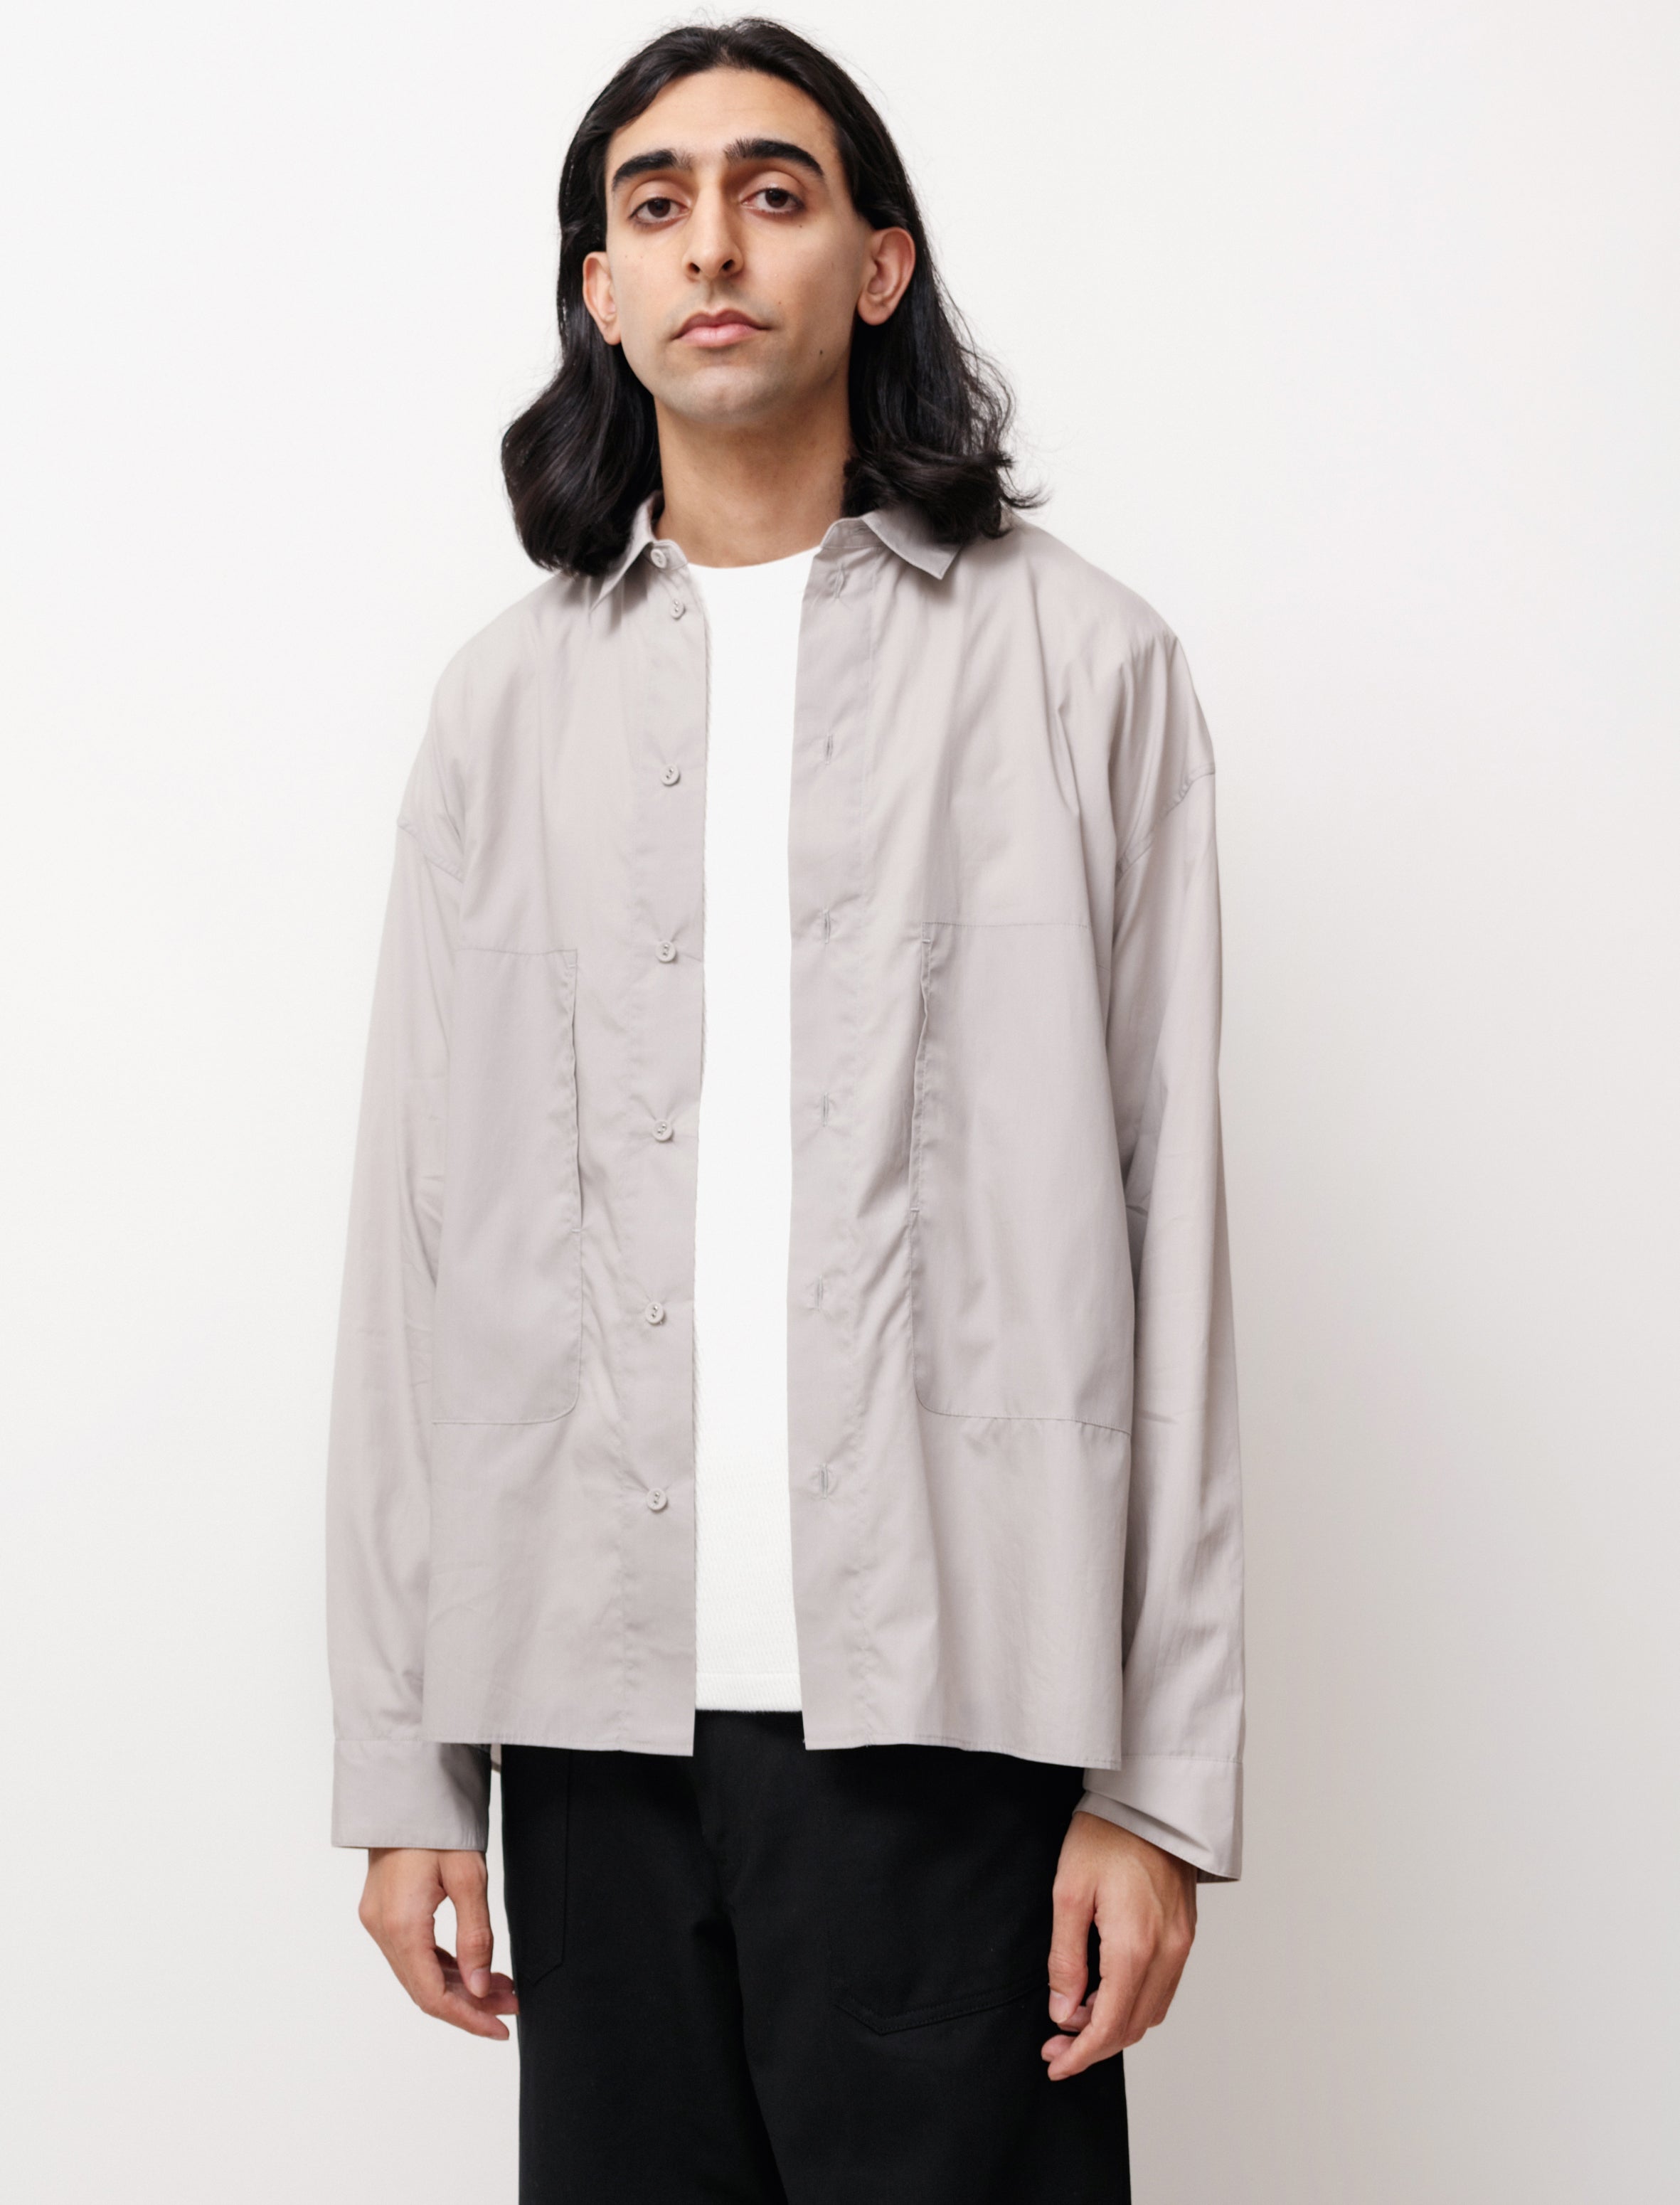 Shirt Jacket C Cotton Pale Grey